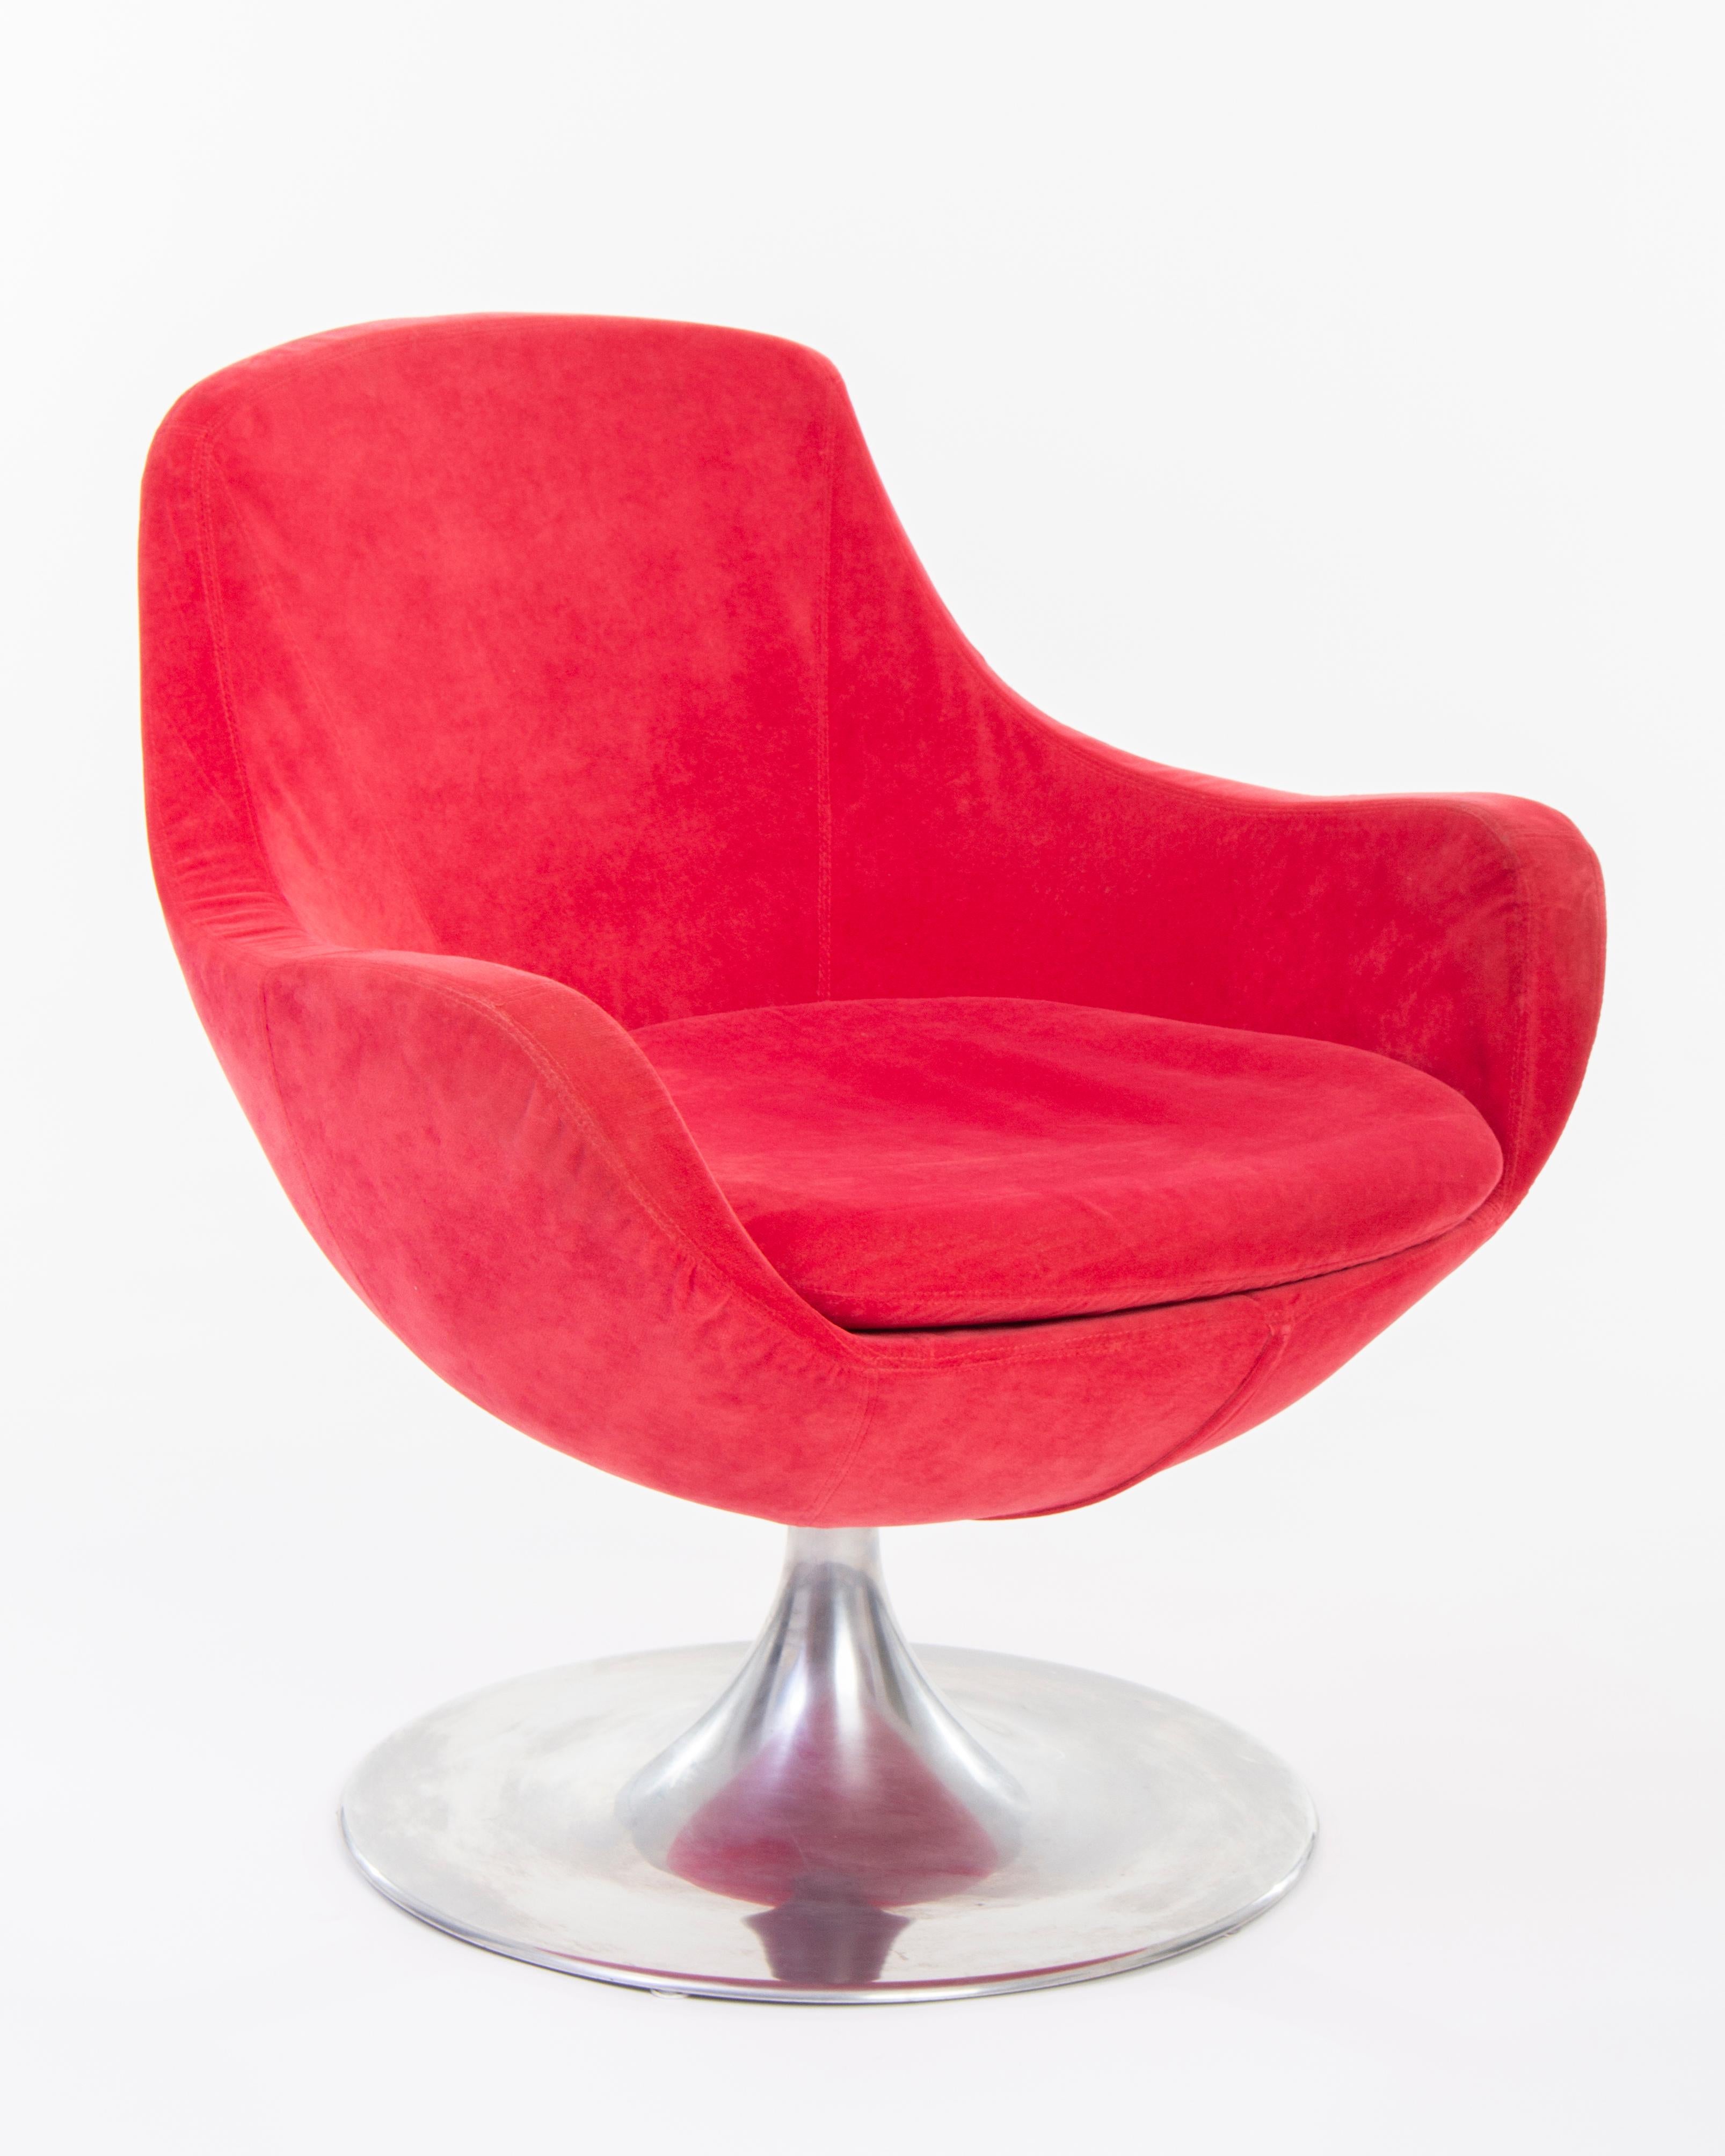 Comfortable swivel chair form the 1960s.
Fits retro interieur design.